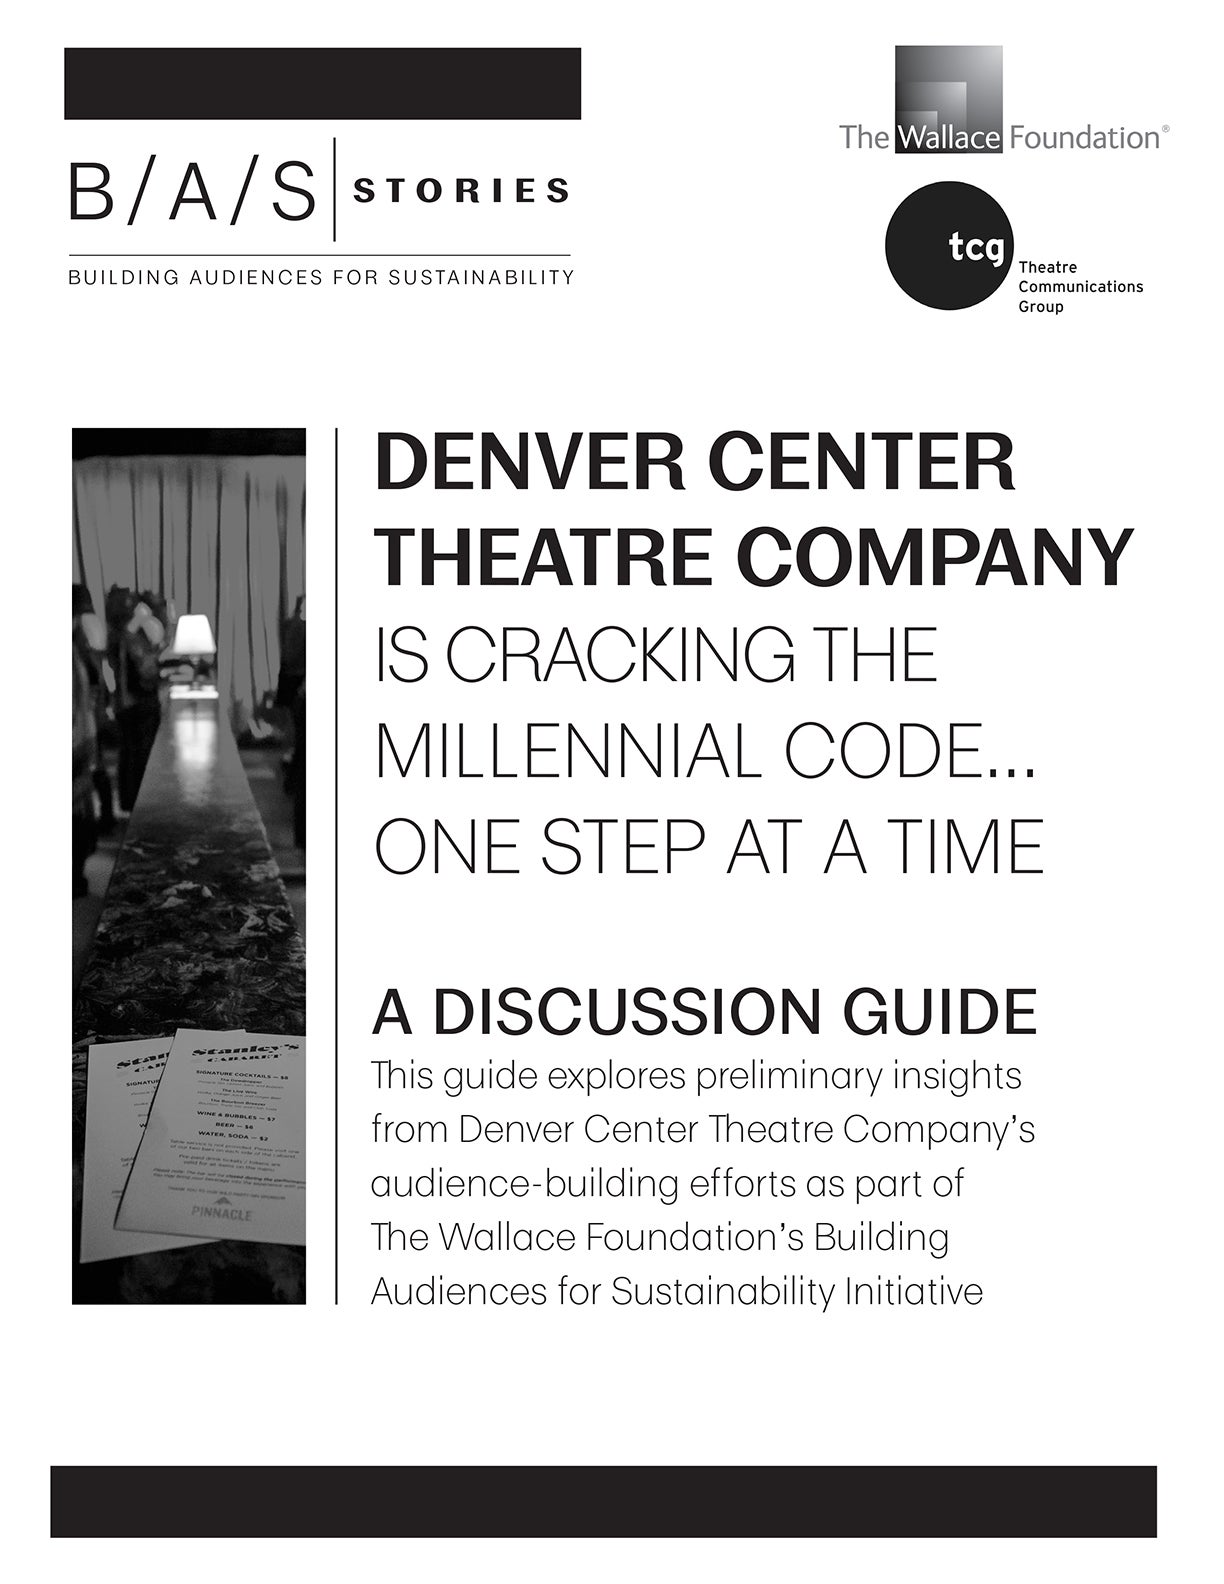 Denver Center Theatre Company